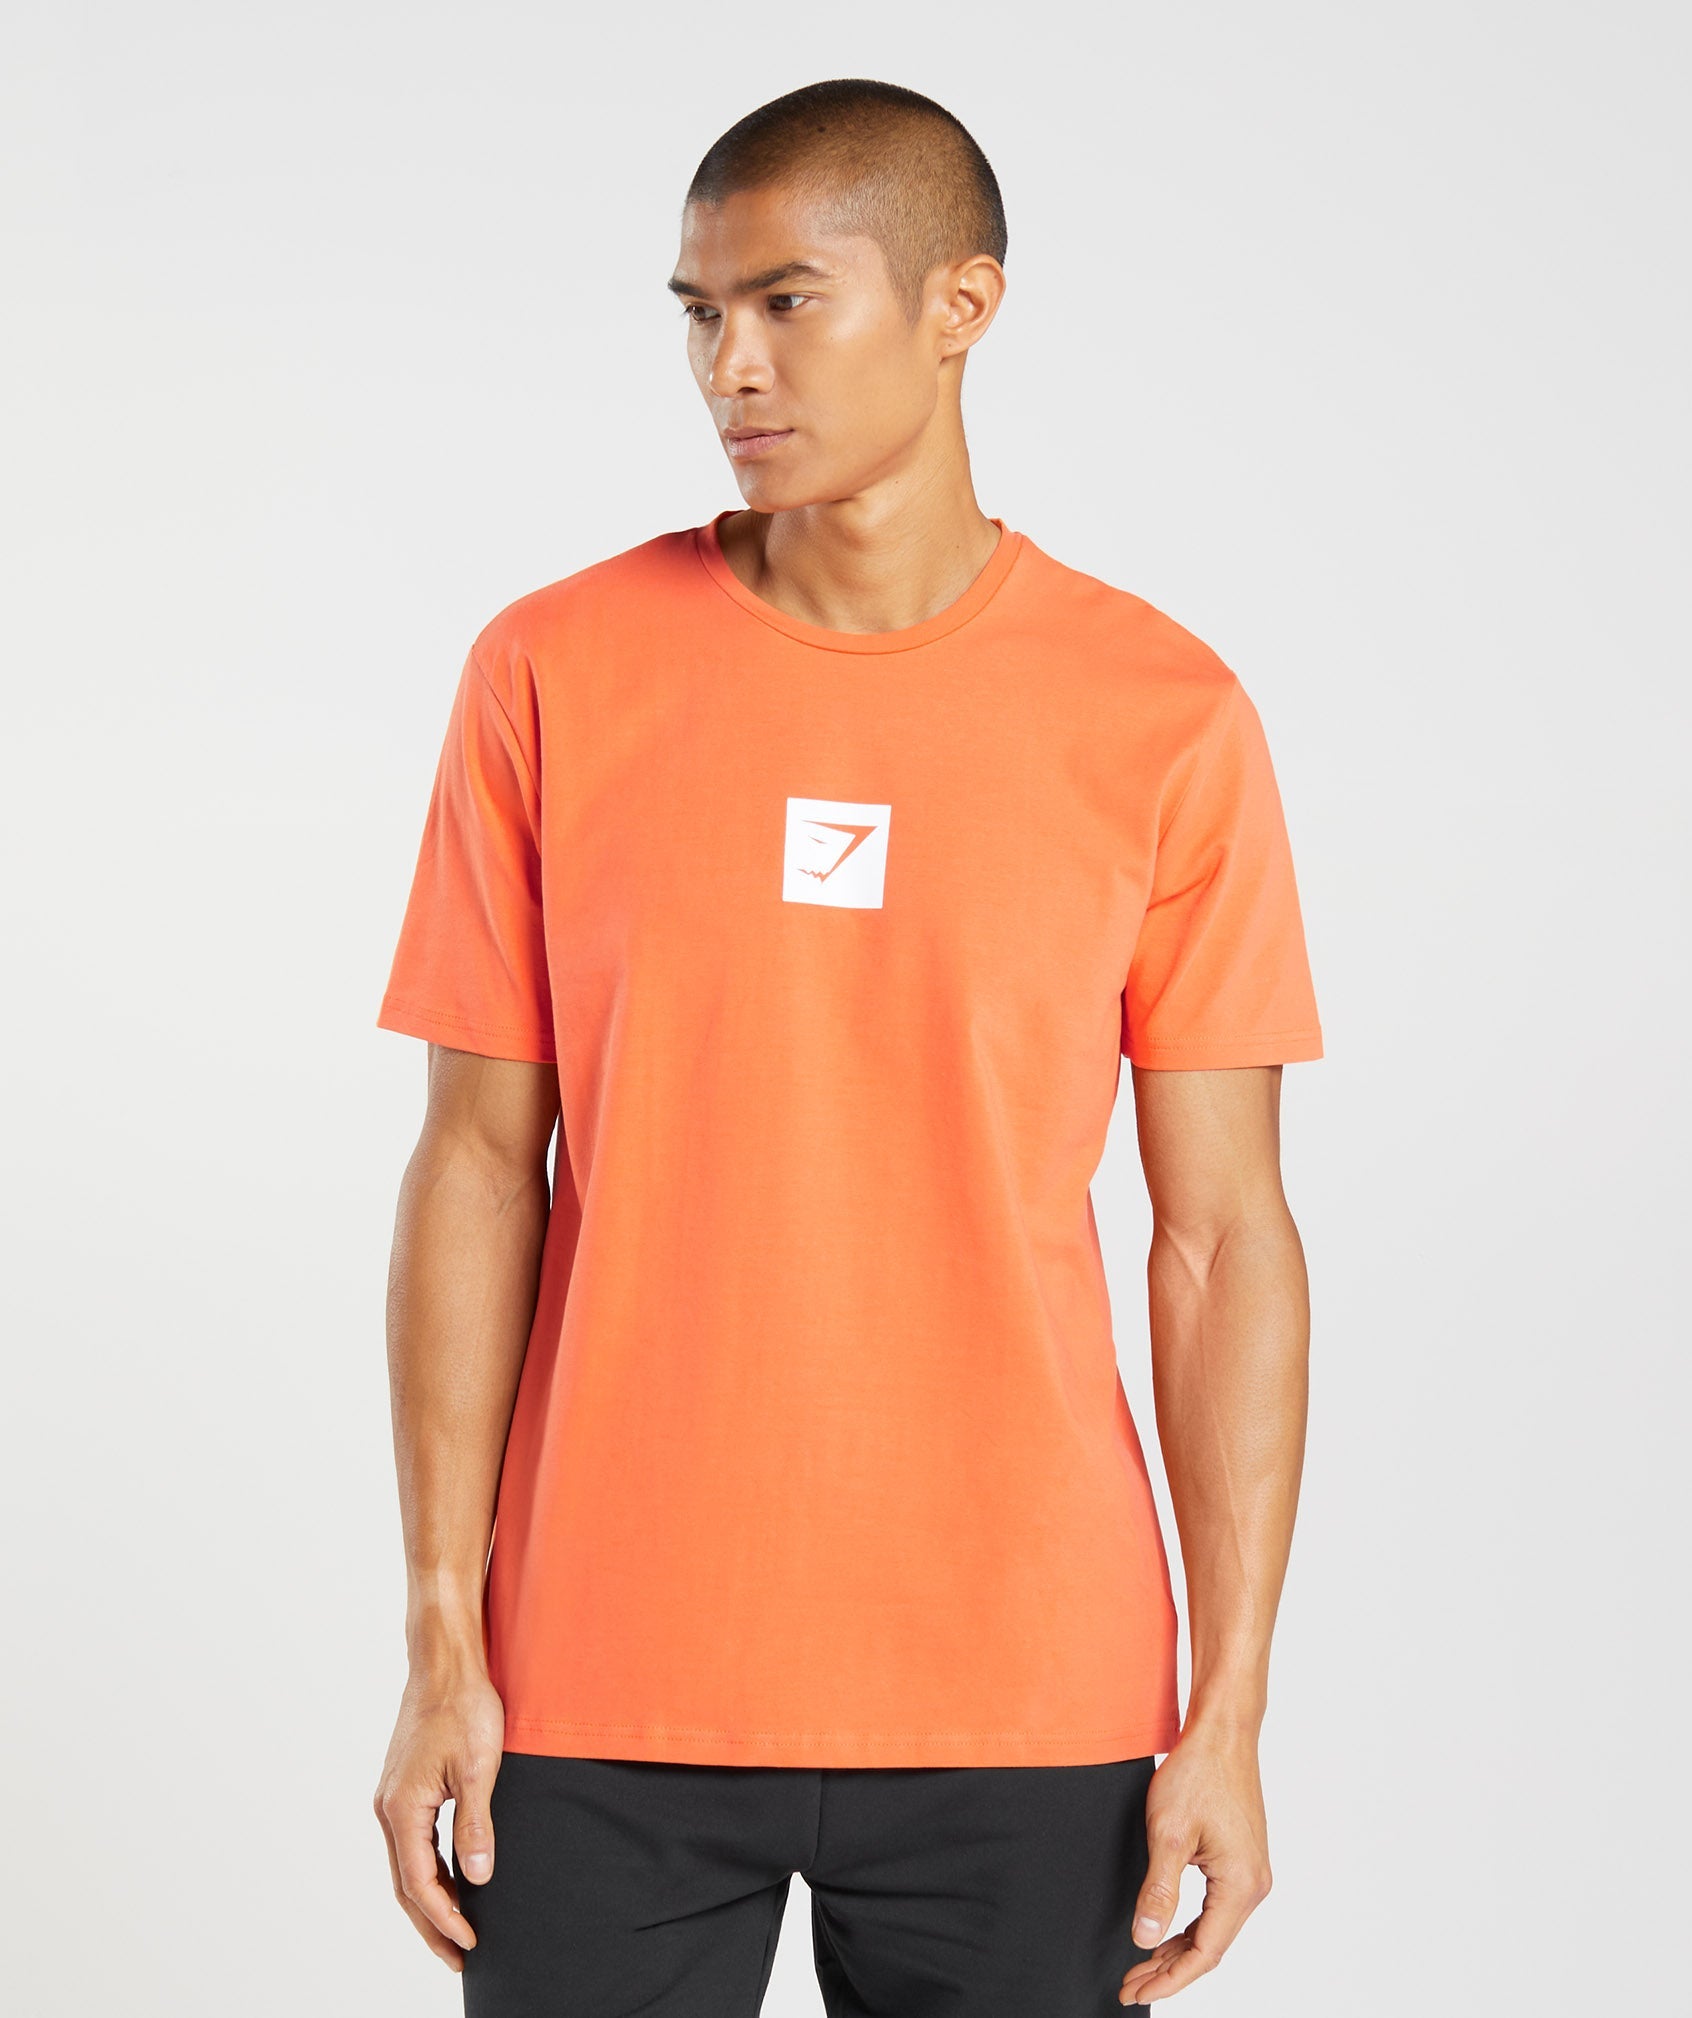 Outline T-Shirt in Zesty Orange - view 1